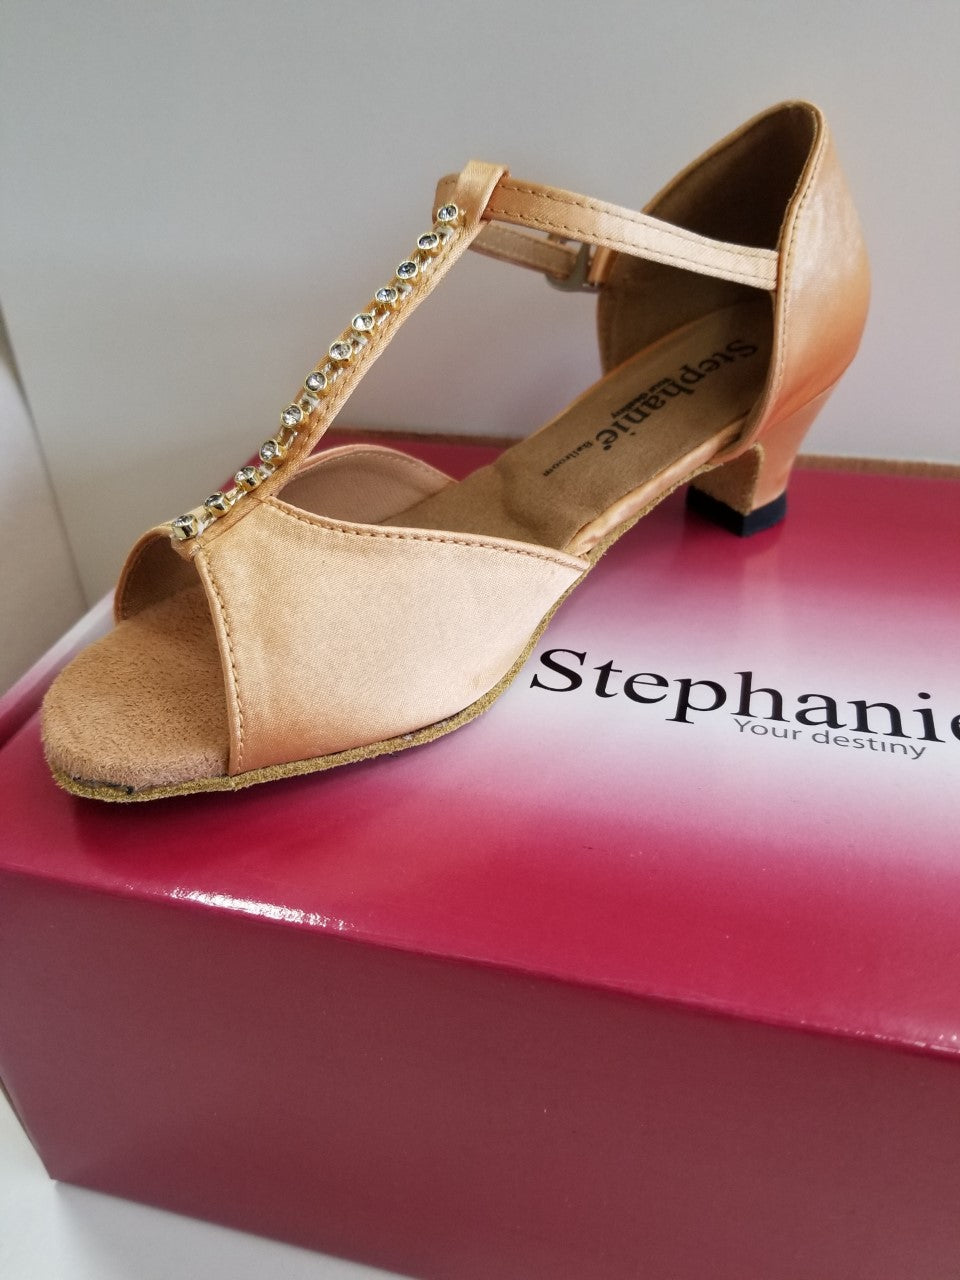 Stephanie Tan Satin size 1 Open Toe Ballroom Shoe